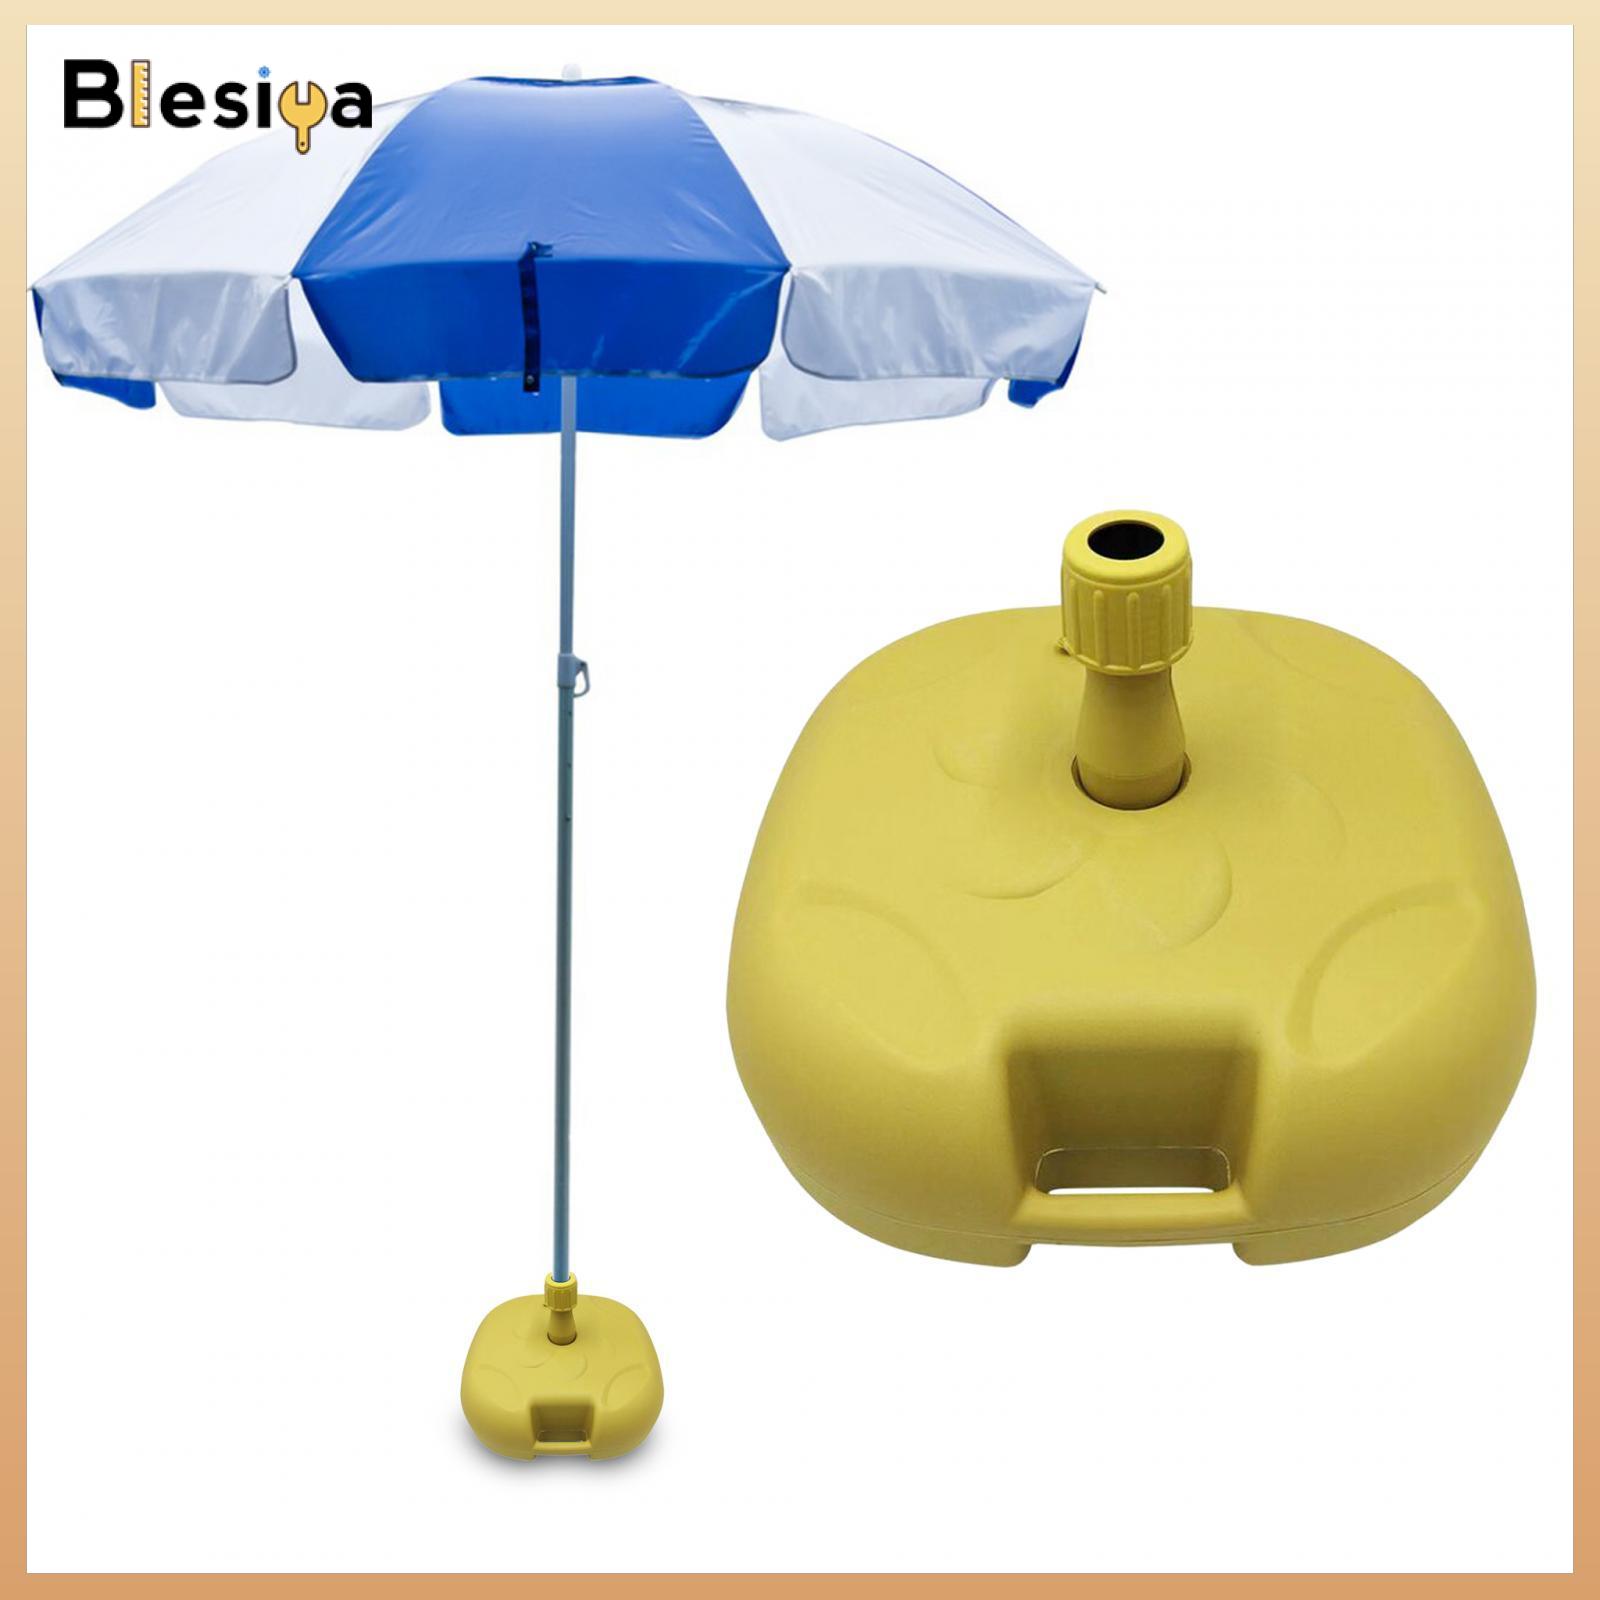 Blesiya Sun Umbrella Base Replacement Parasol Umbrella Stand for Backyard